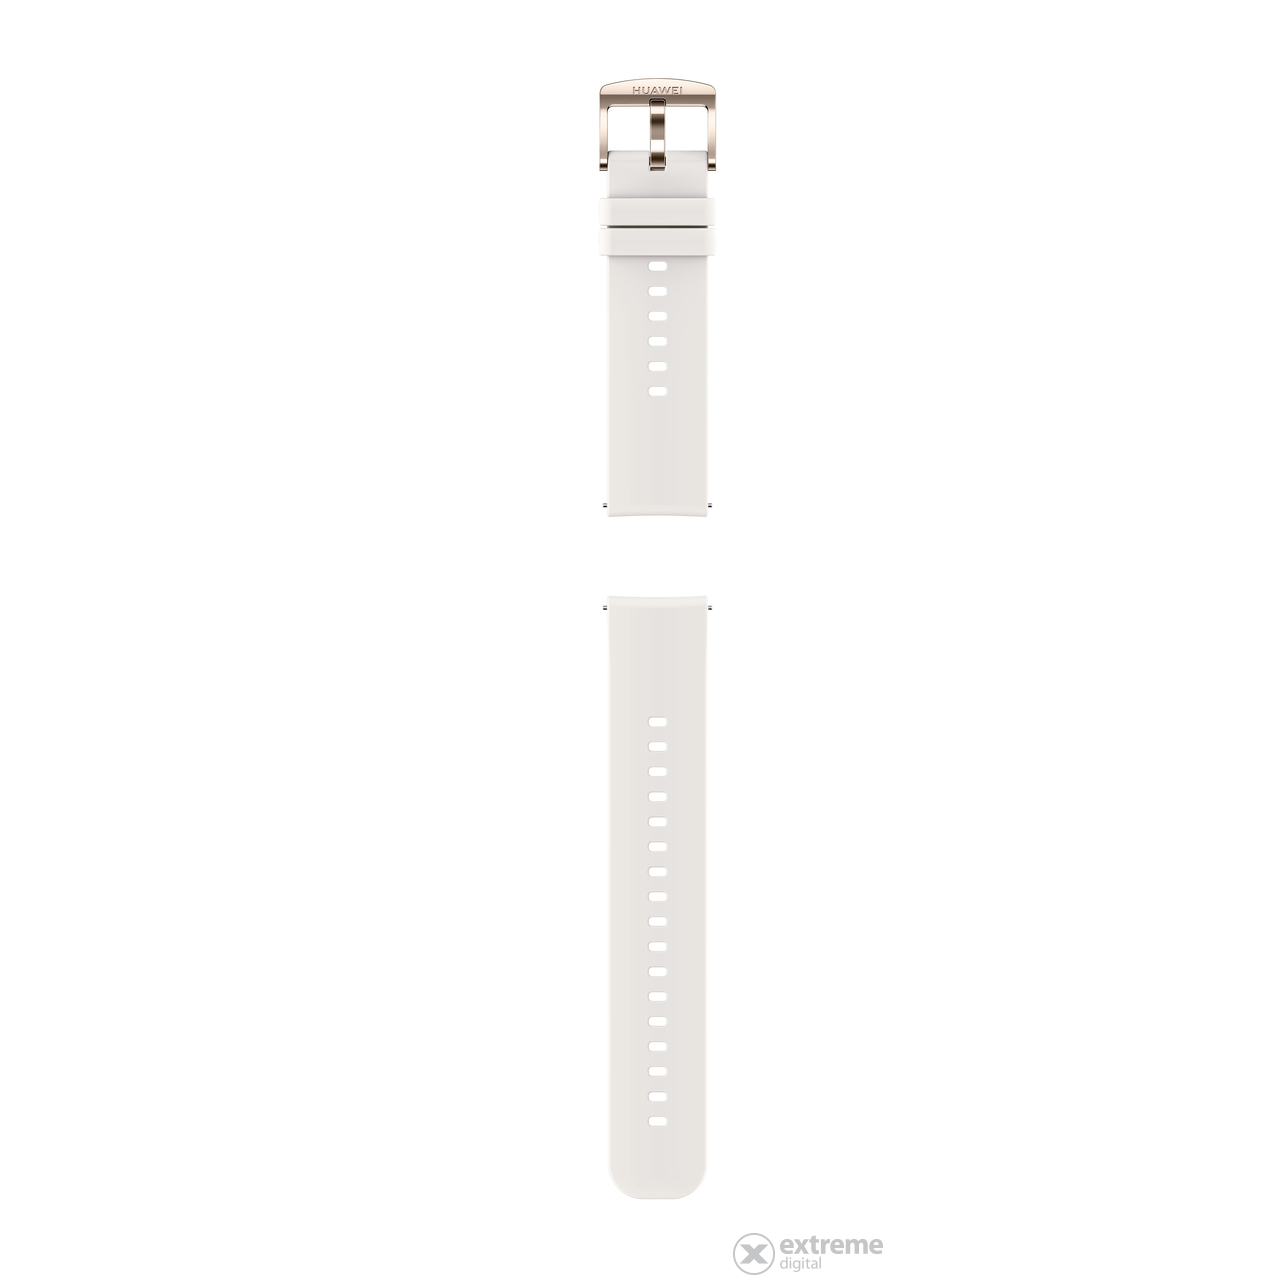 Huawei Watch GT 2 pametni sat, ledeno bijela (42mm)